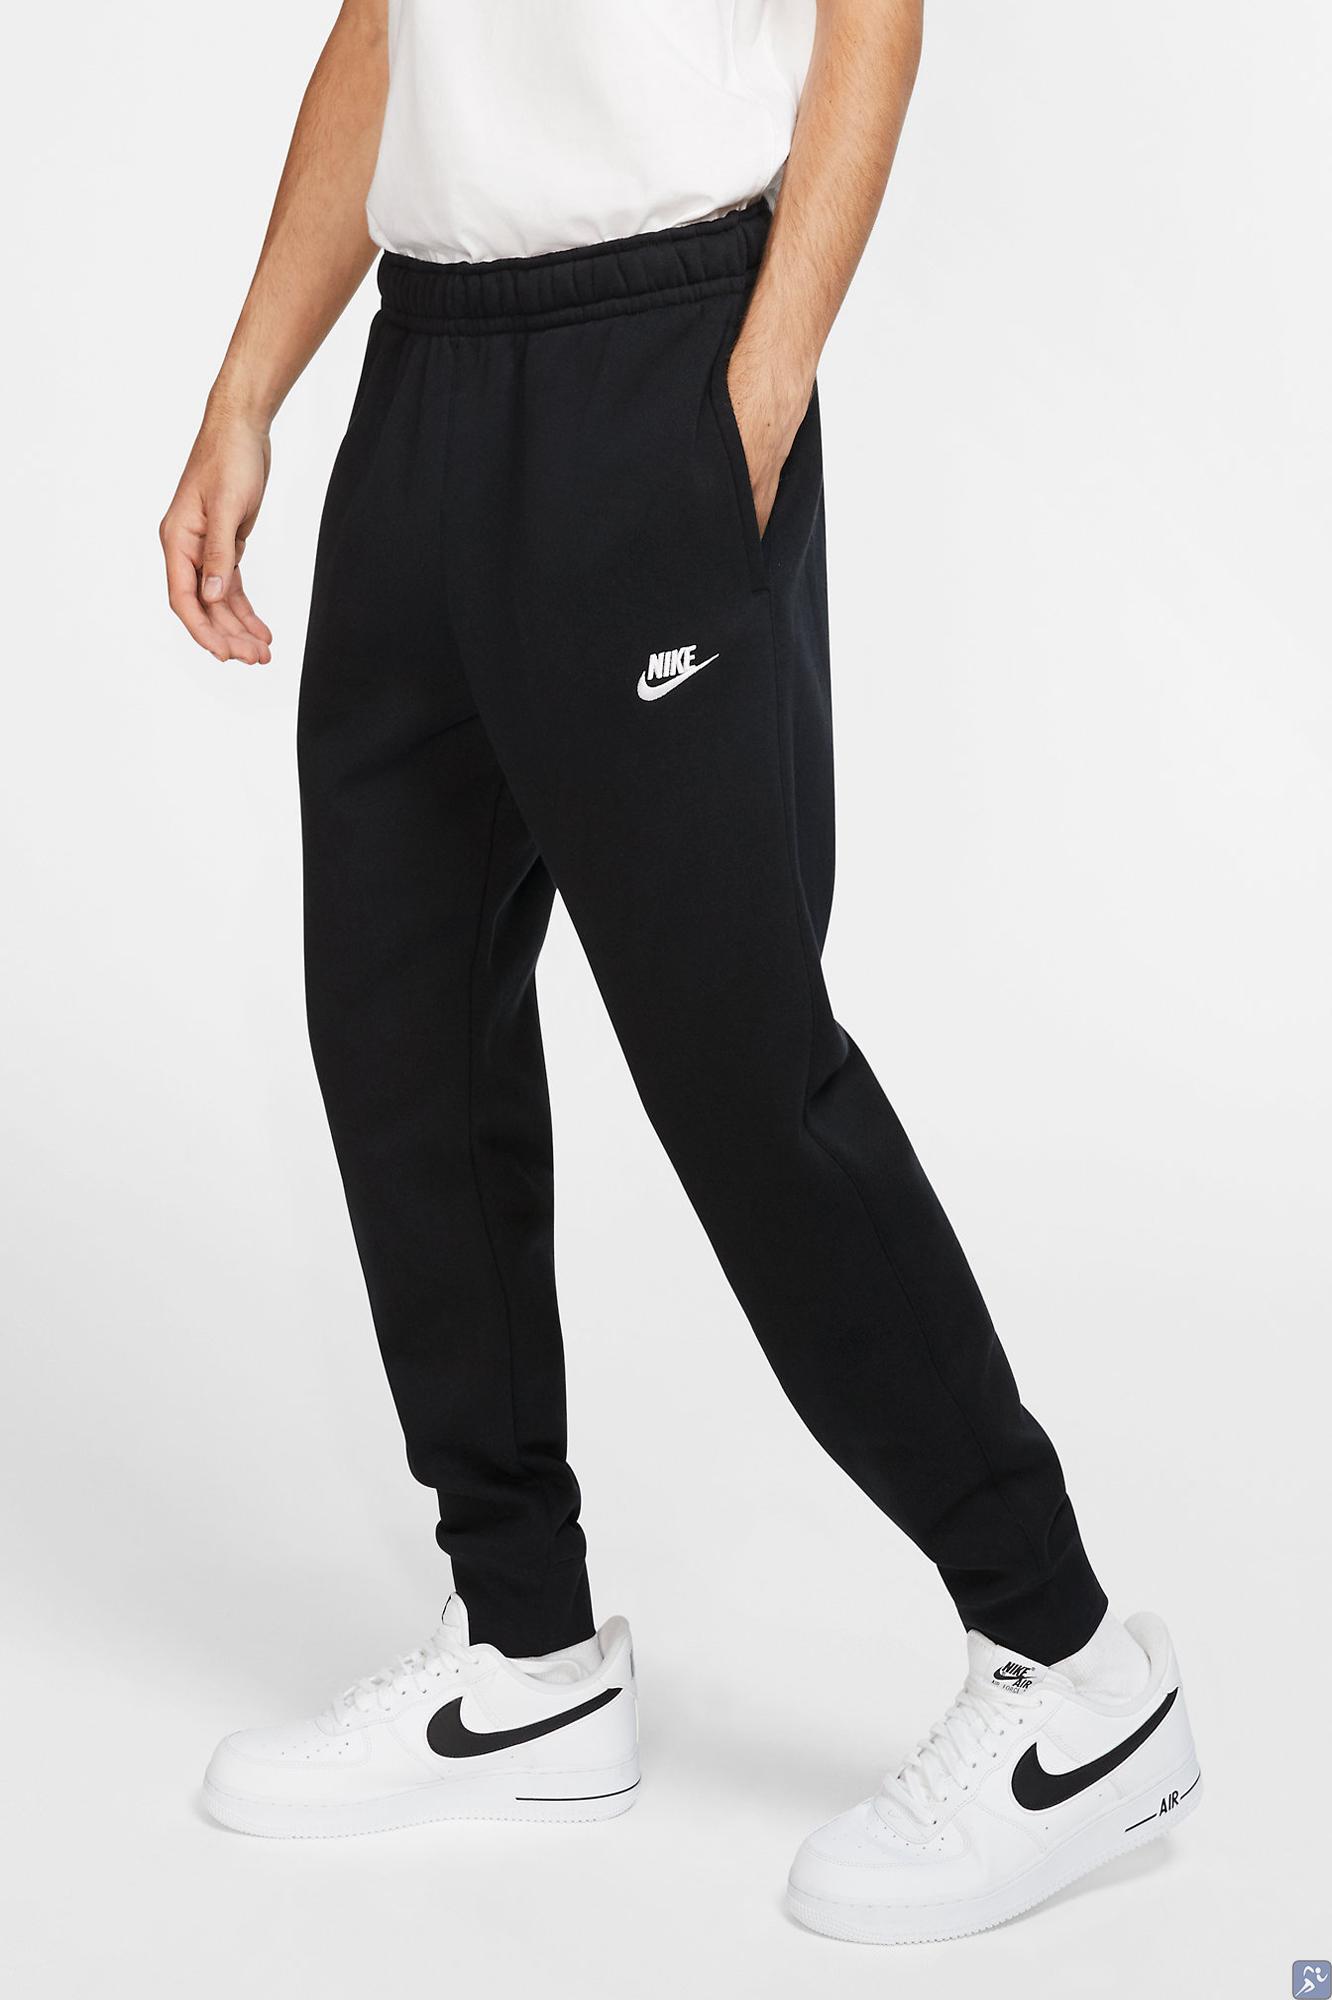 Спортивные брюки мужские Nike Sportswear Club BV2679 010 - купить винтернет магазине Acrobat24.ru